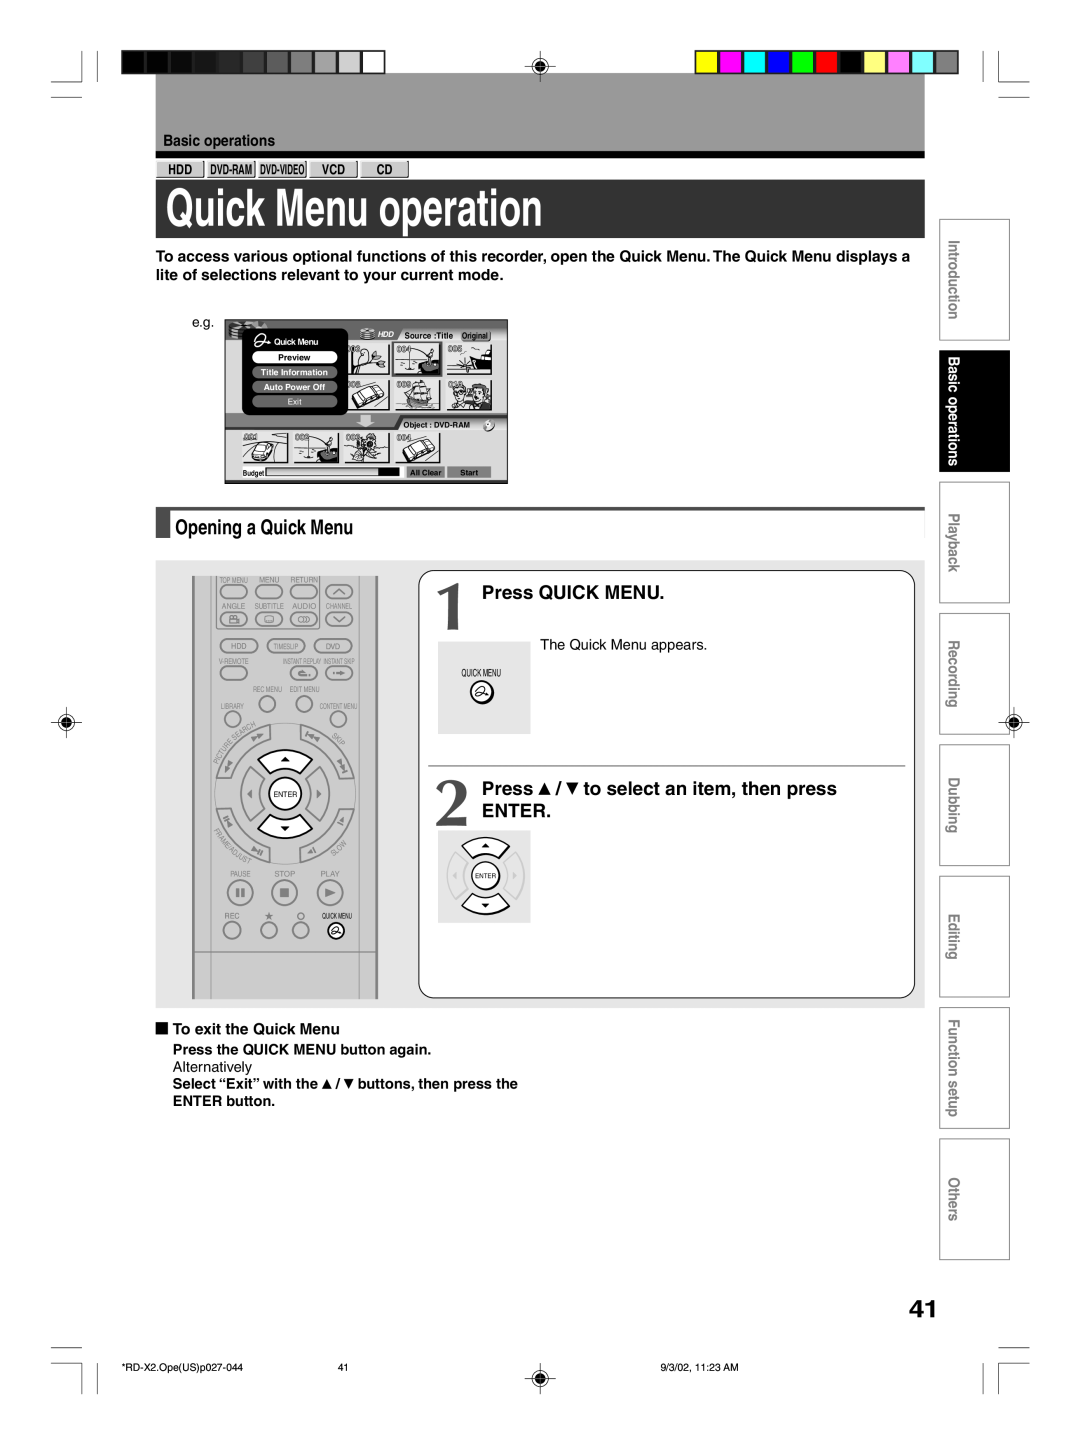 Toshiba RD-X2U Quick Menu operation, Opening a Quick Menu, Press QUICK MENU, Press / to select an item, then press ENTER 